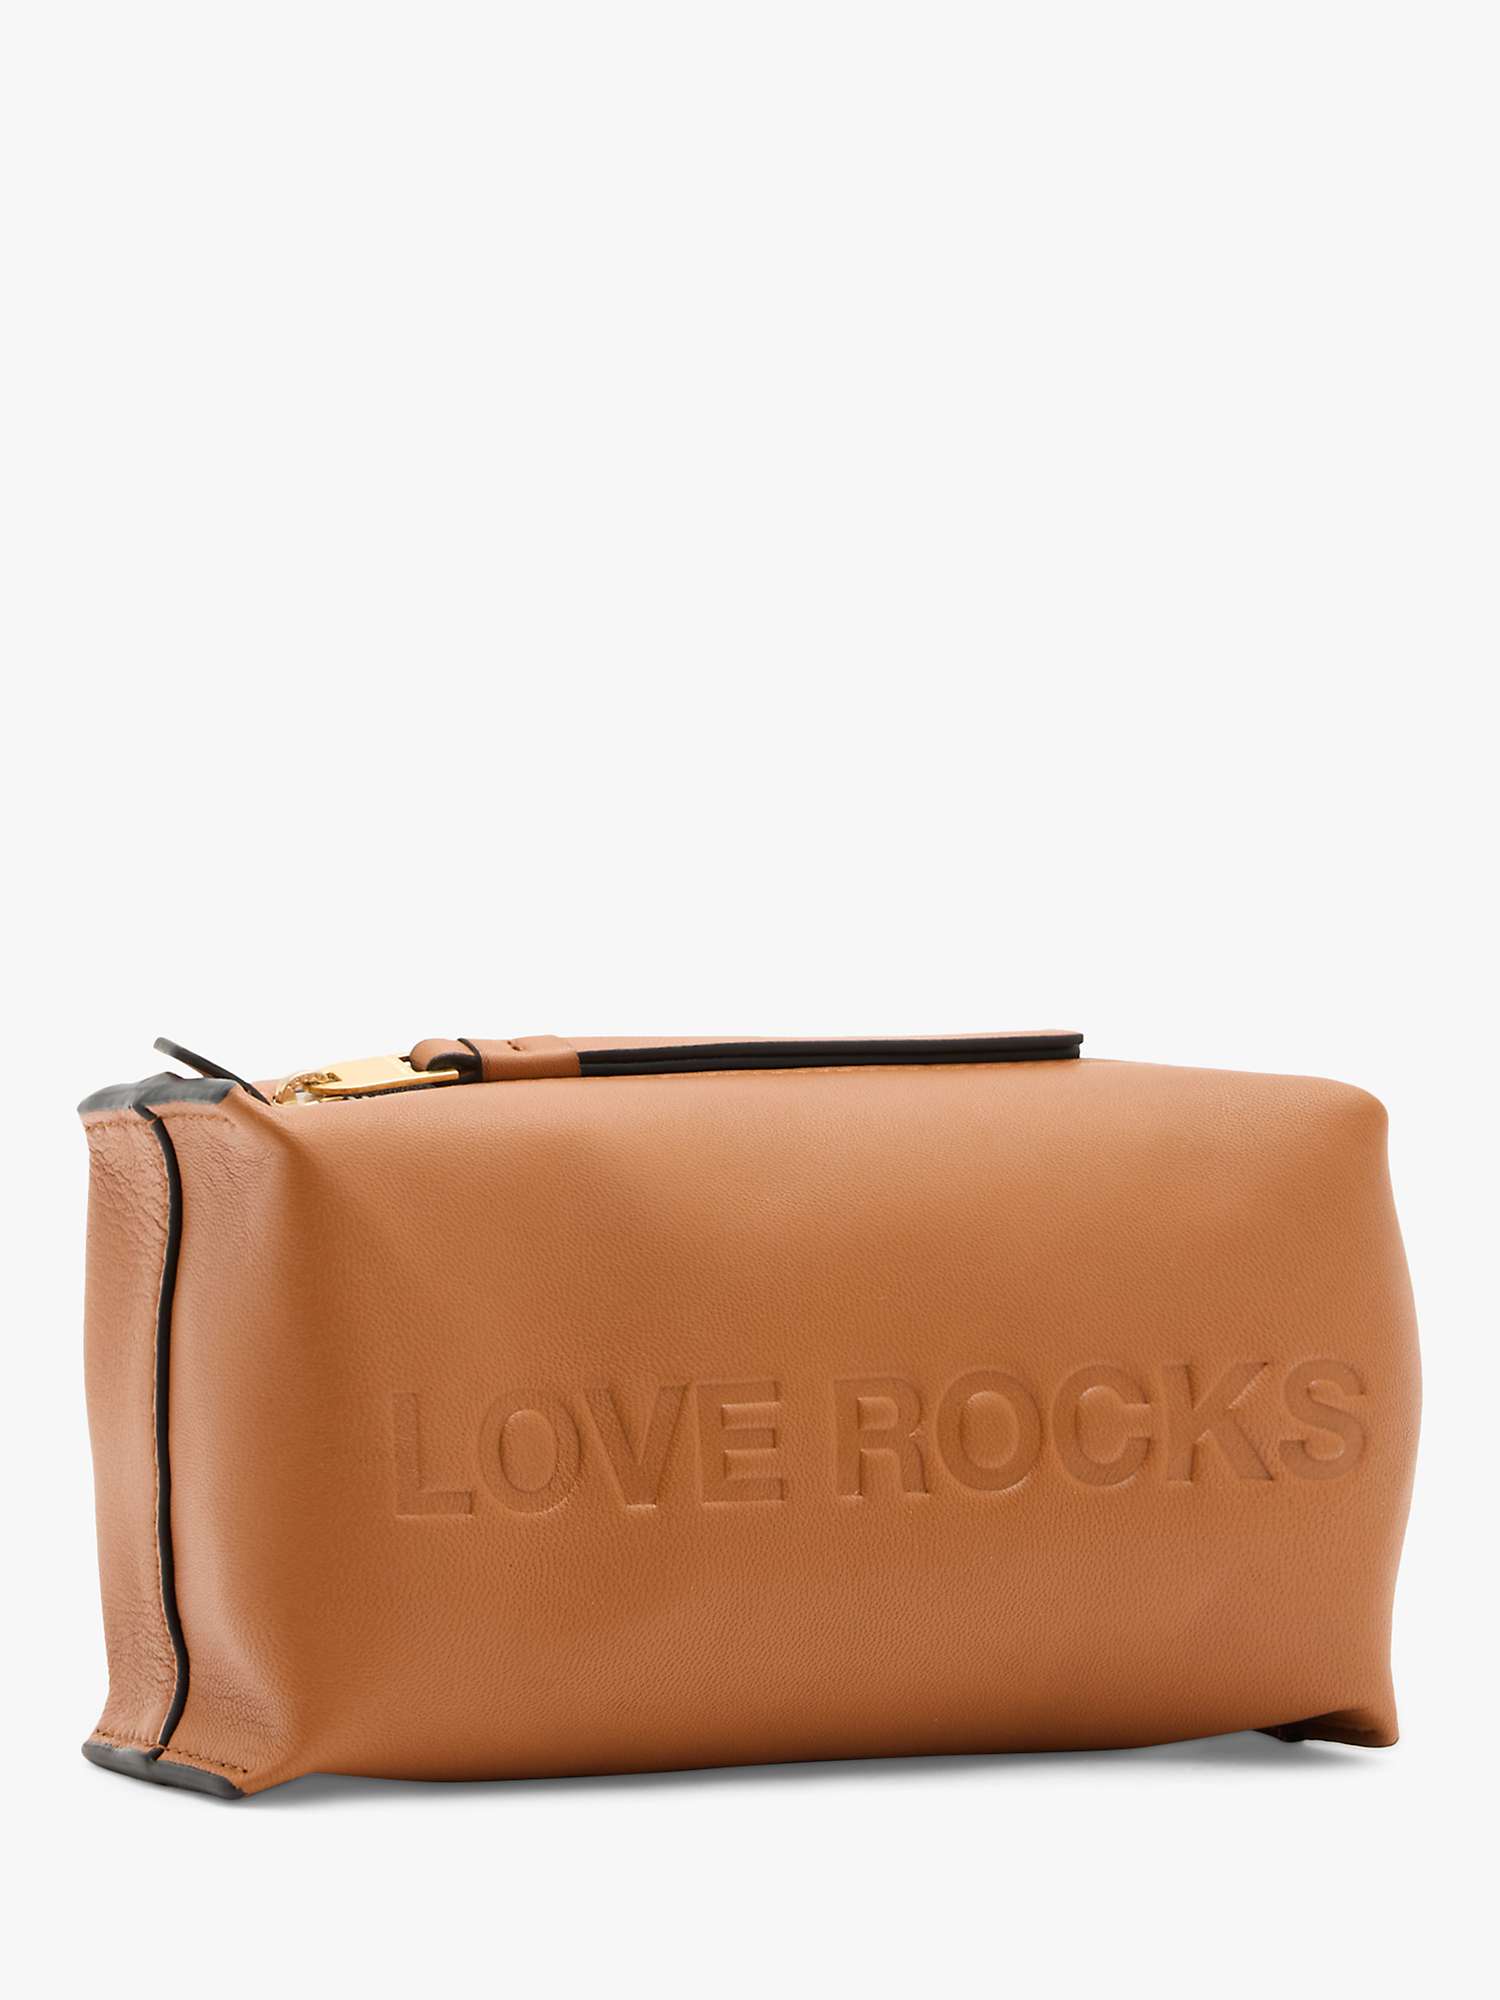 Buy AllSaints Elliotte Love Rocks Leather Pouch Online at johnlewis.com